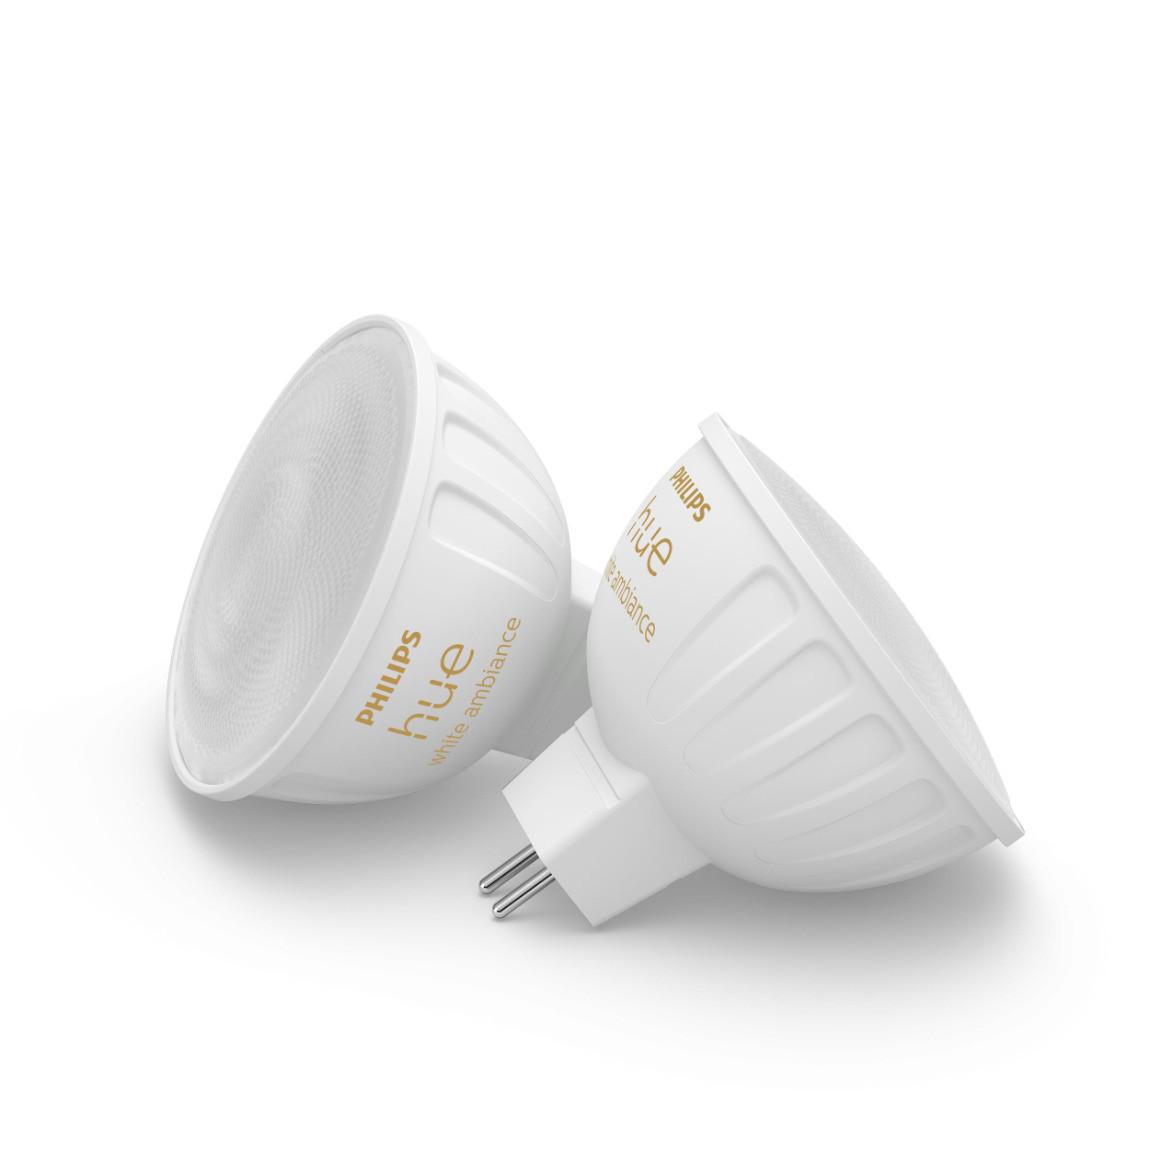 Philips Hue White Amb. MR16 LED Lampe Doppelpack 2x400lm